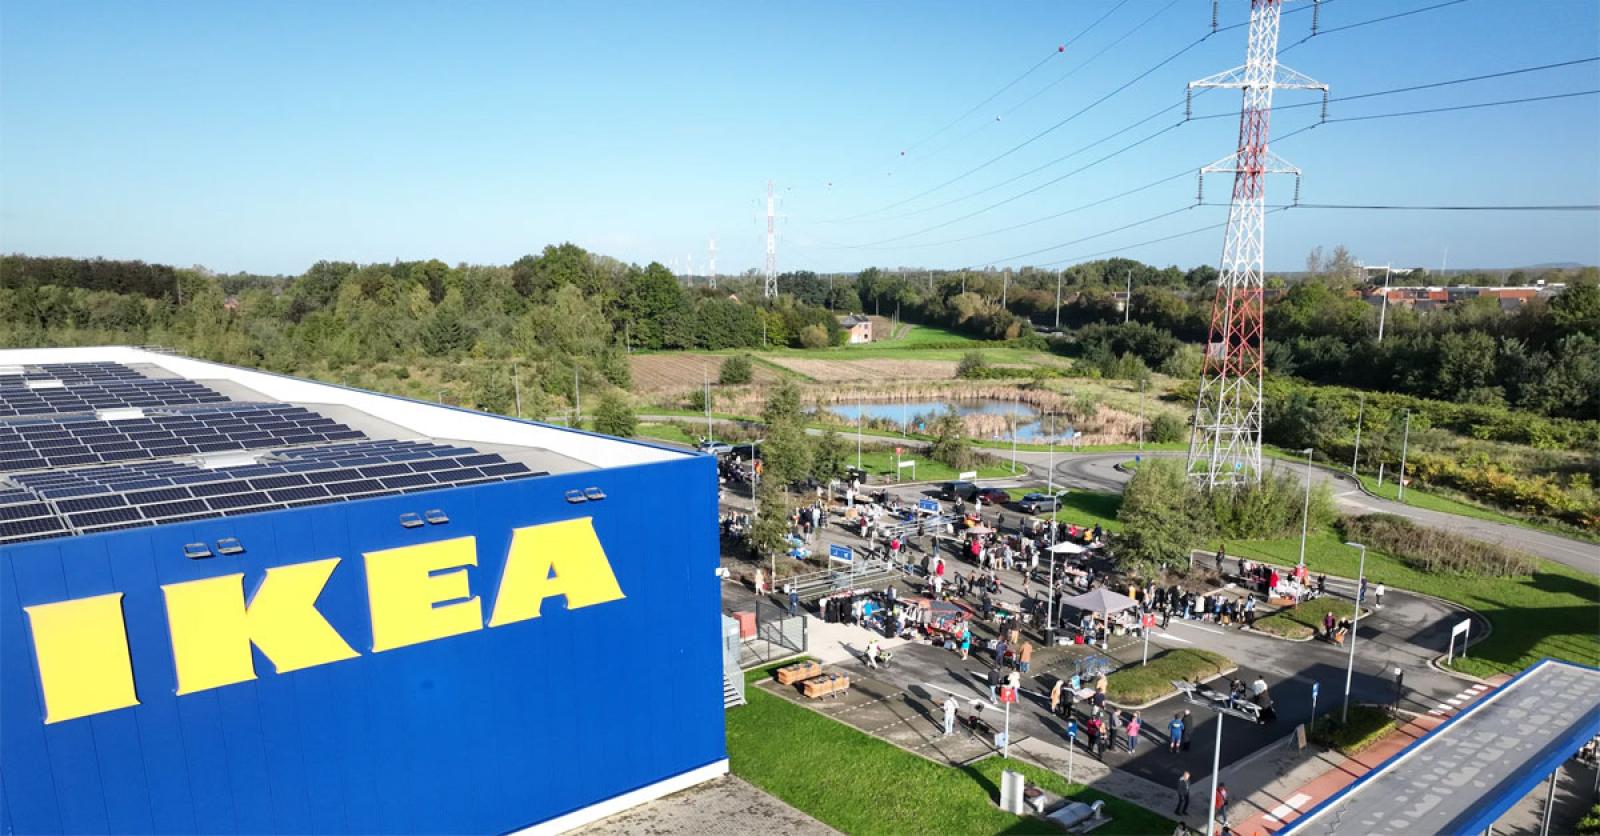 IKEA organizes the largest flea market in Belgium